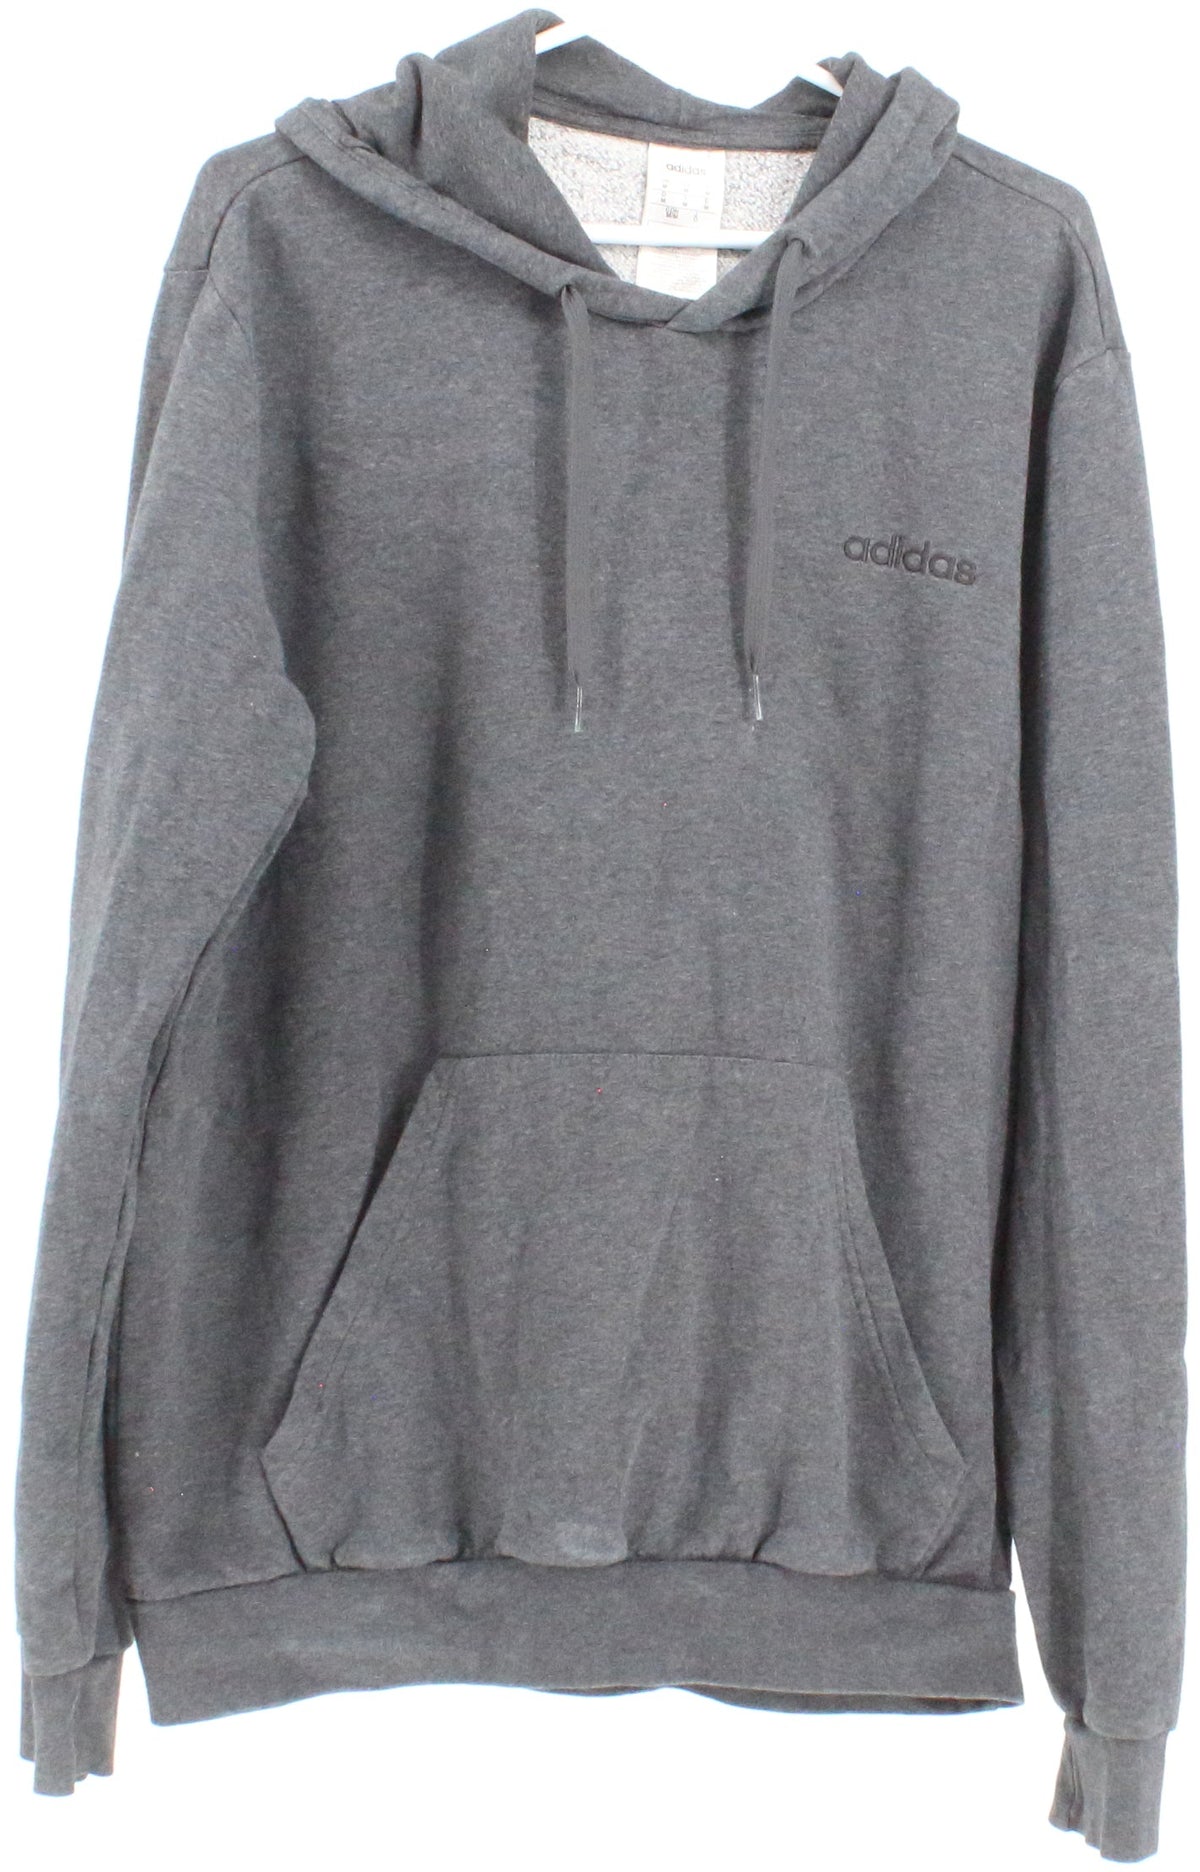 Adidas Dark Grey Hooded Sweatshirt With Front Pockets